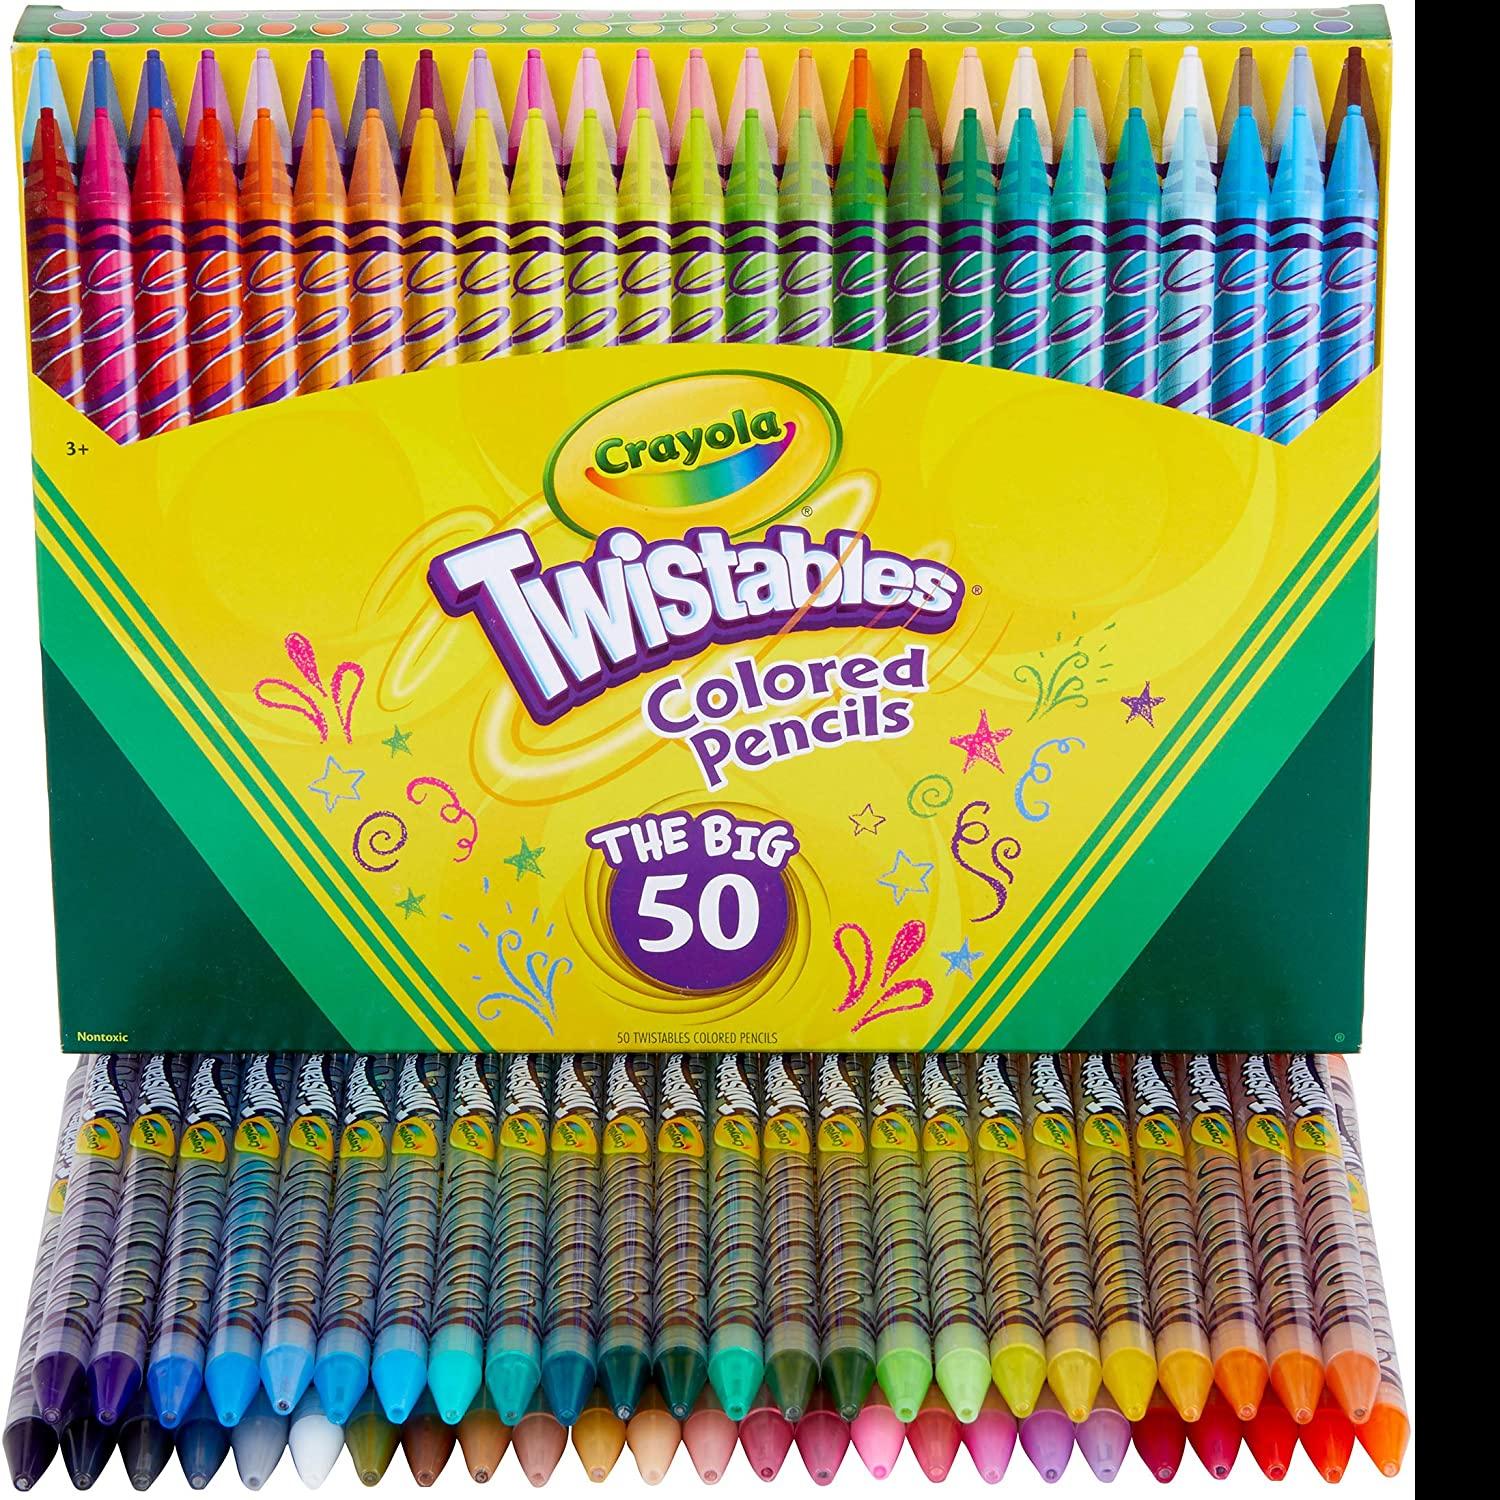 50 Crayola Twistables Colored Pencil Set for $9.79